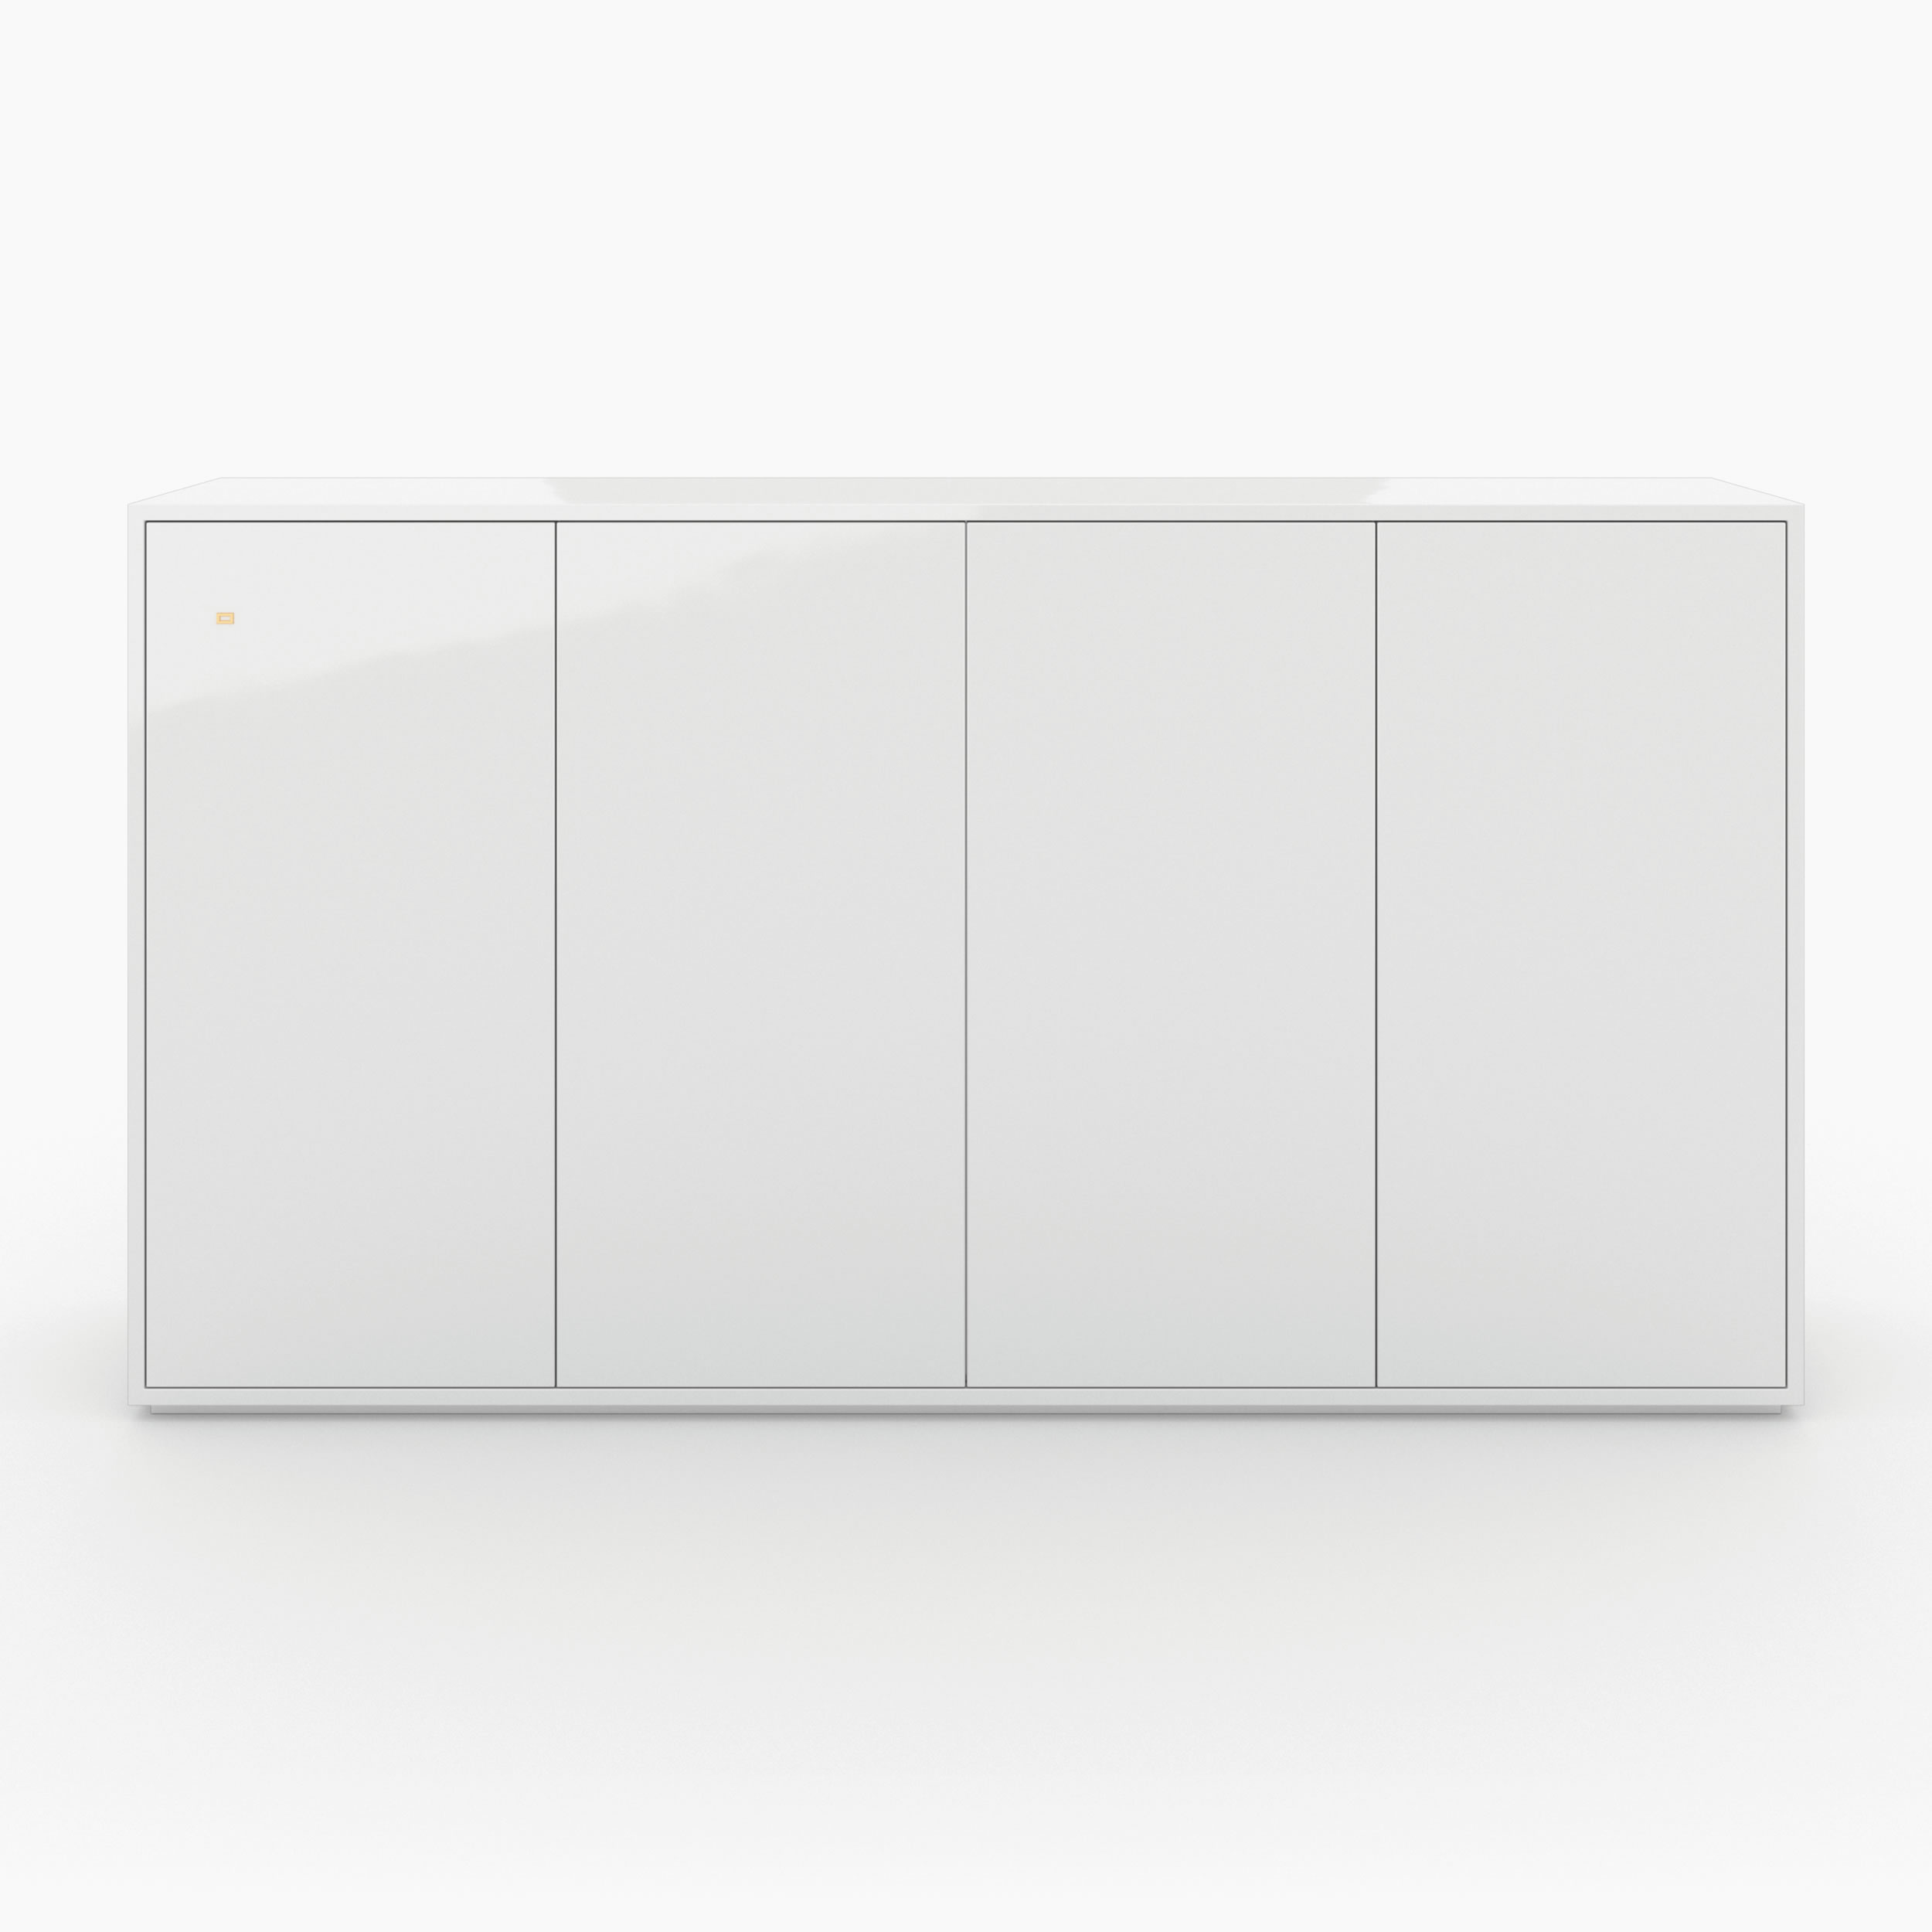 Sideboard quader weiss white spaces Buero collectible design Sideboards FS 64 FELIX SCHWAKE